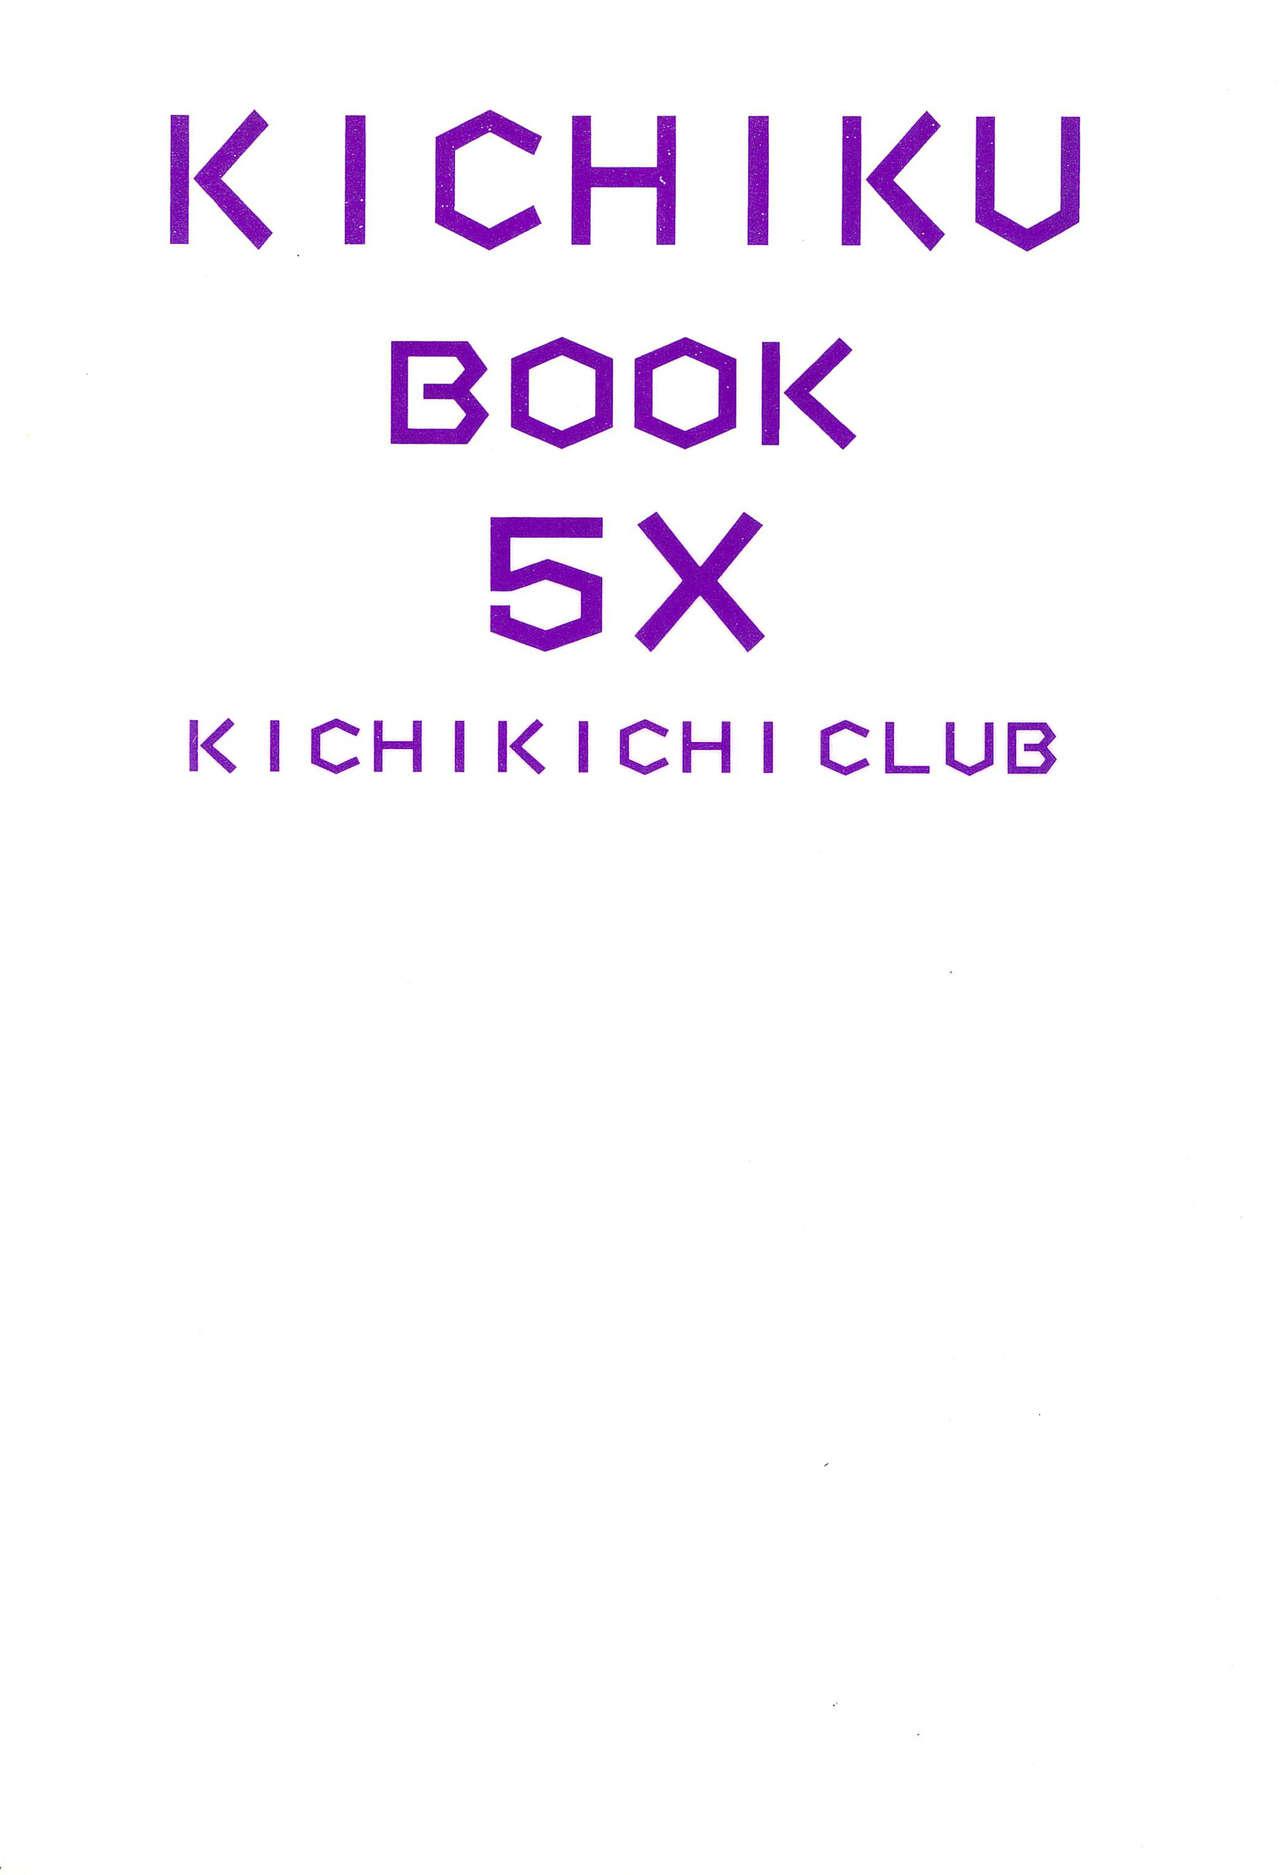 KICHIKU BOOK 5X 37